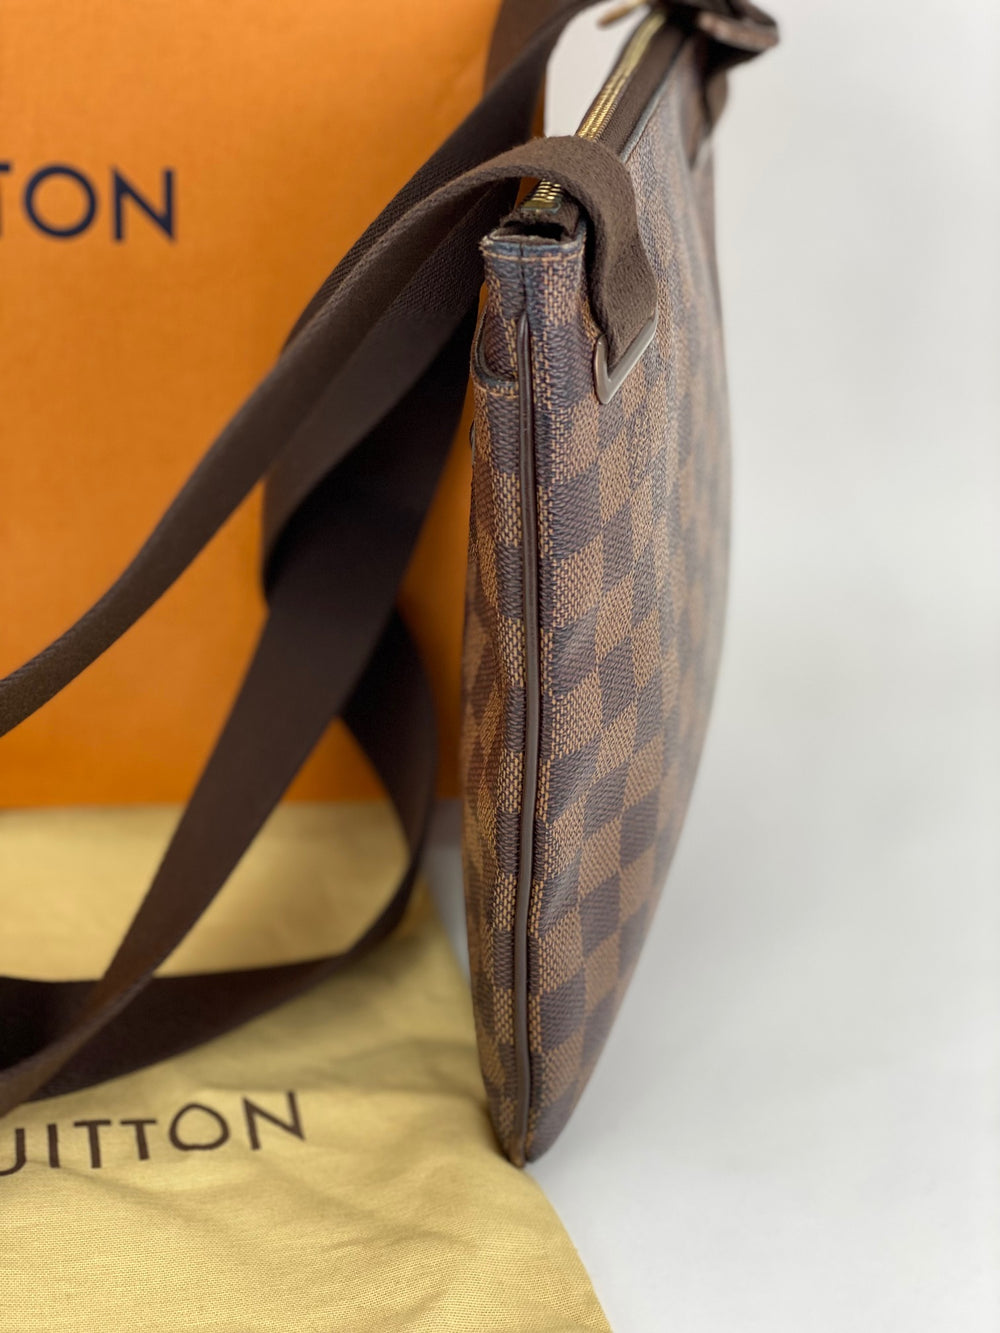 Auth Louis Vuitton Damier Ebene Brooklyn Messenger Bag N51211 Used